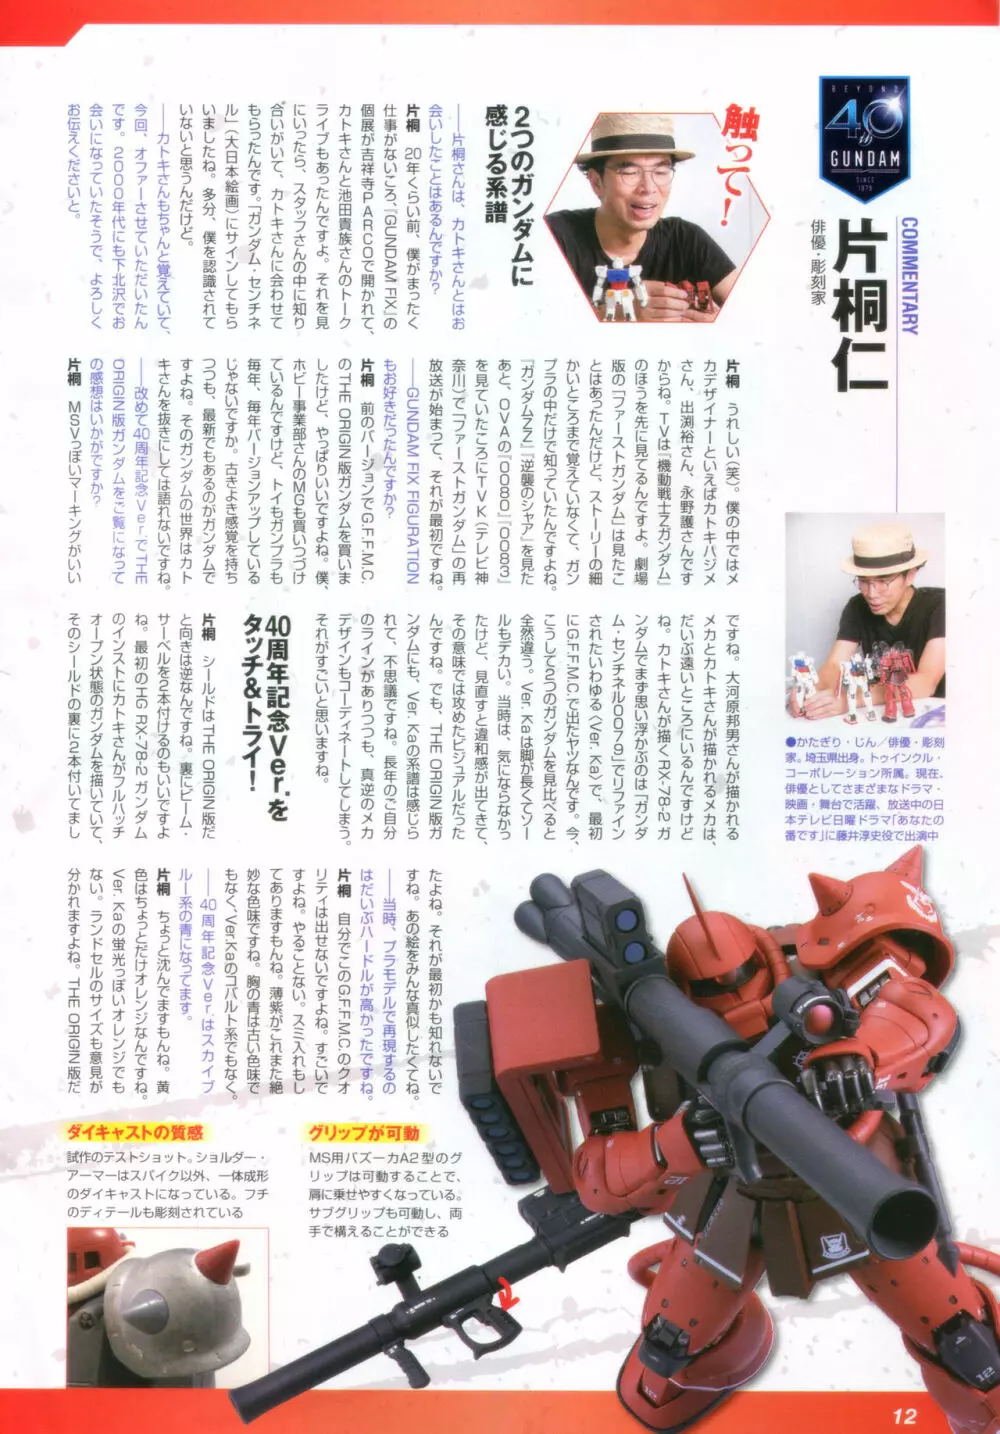 Gundam Ace – October 2019 15ページ